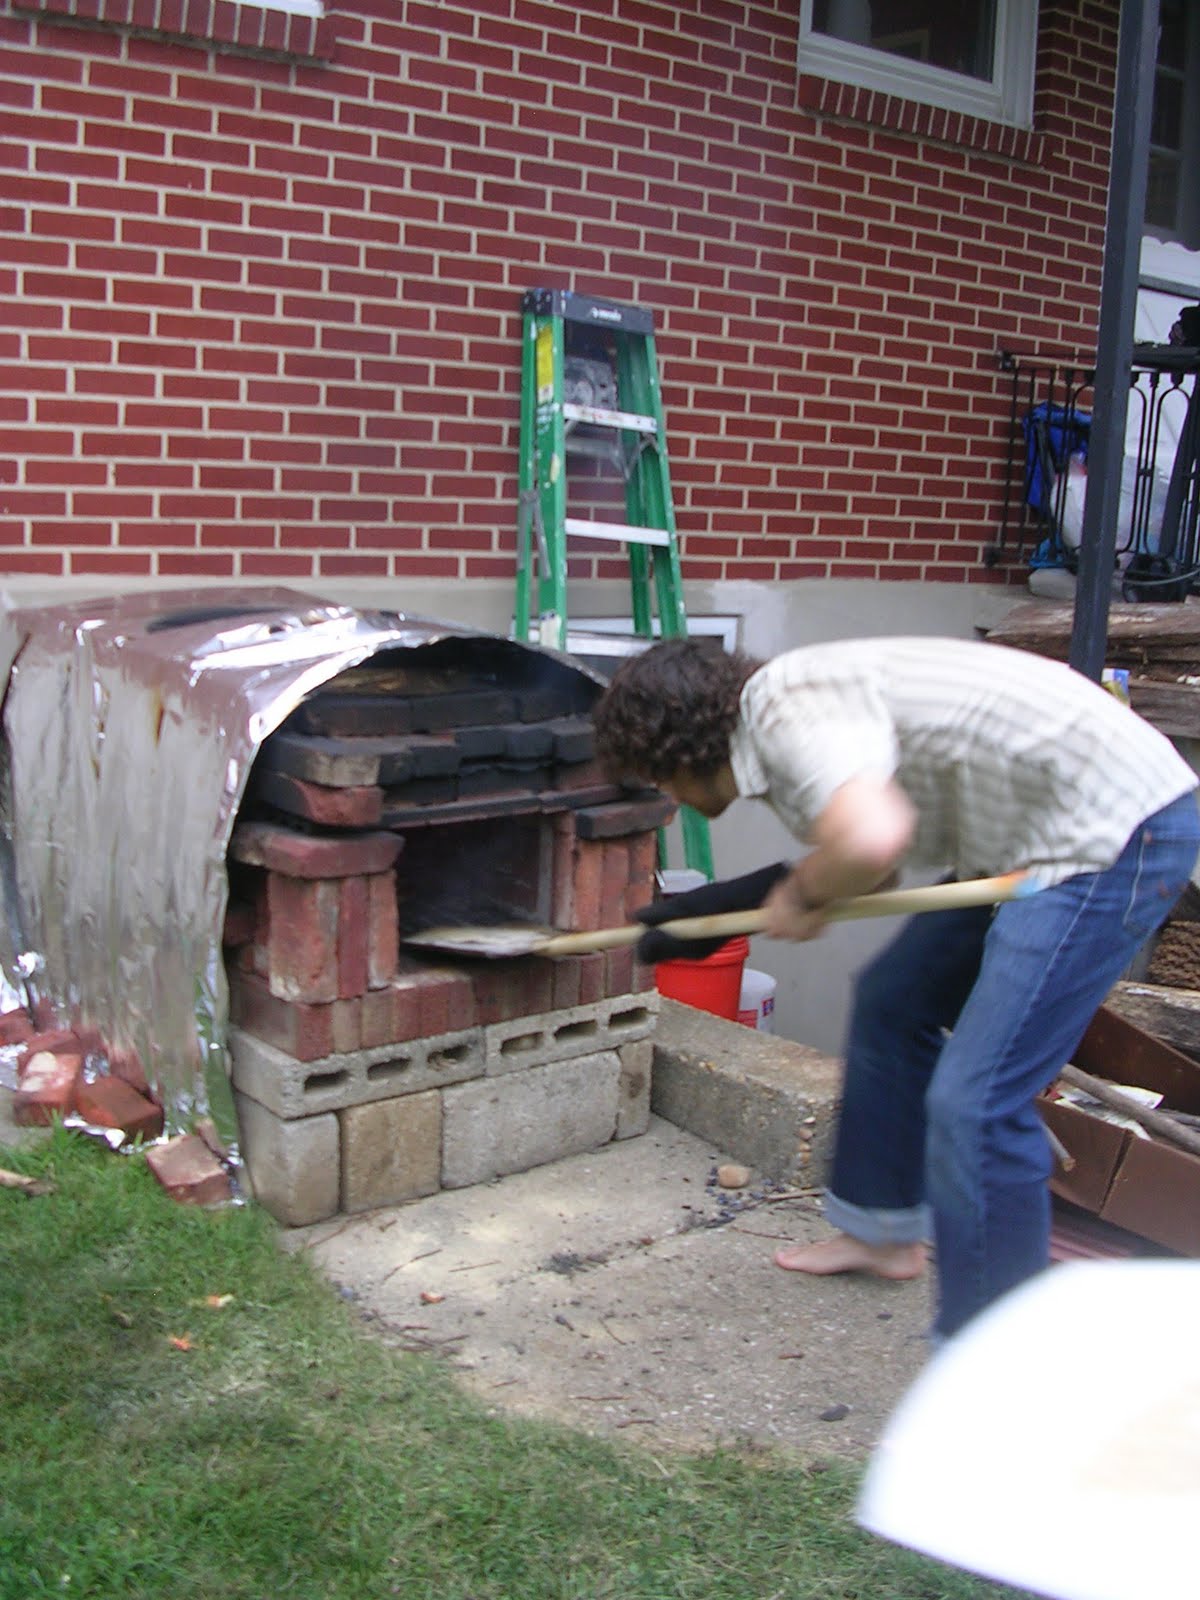 brick oven plans free